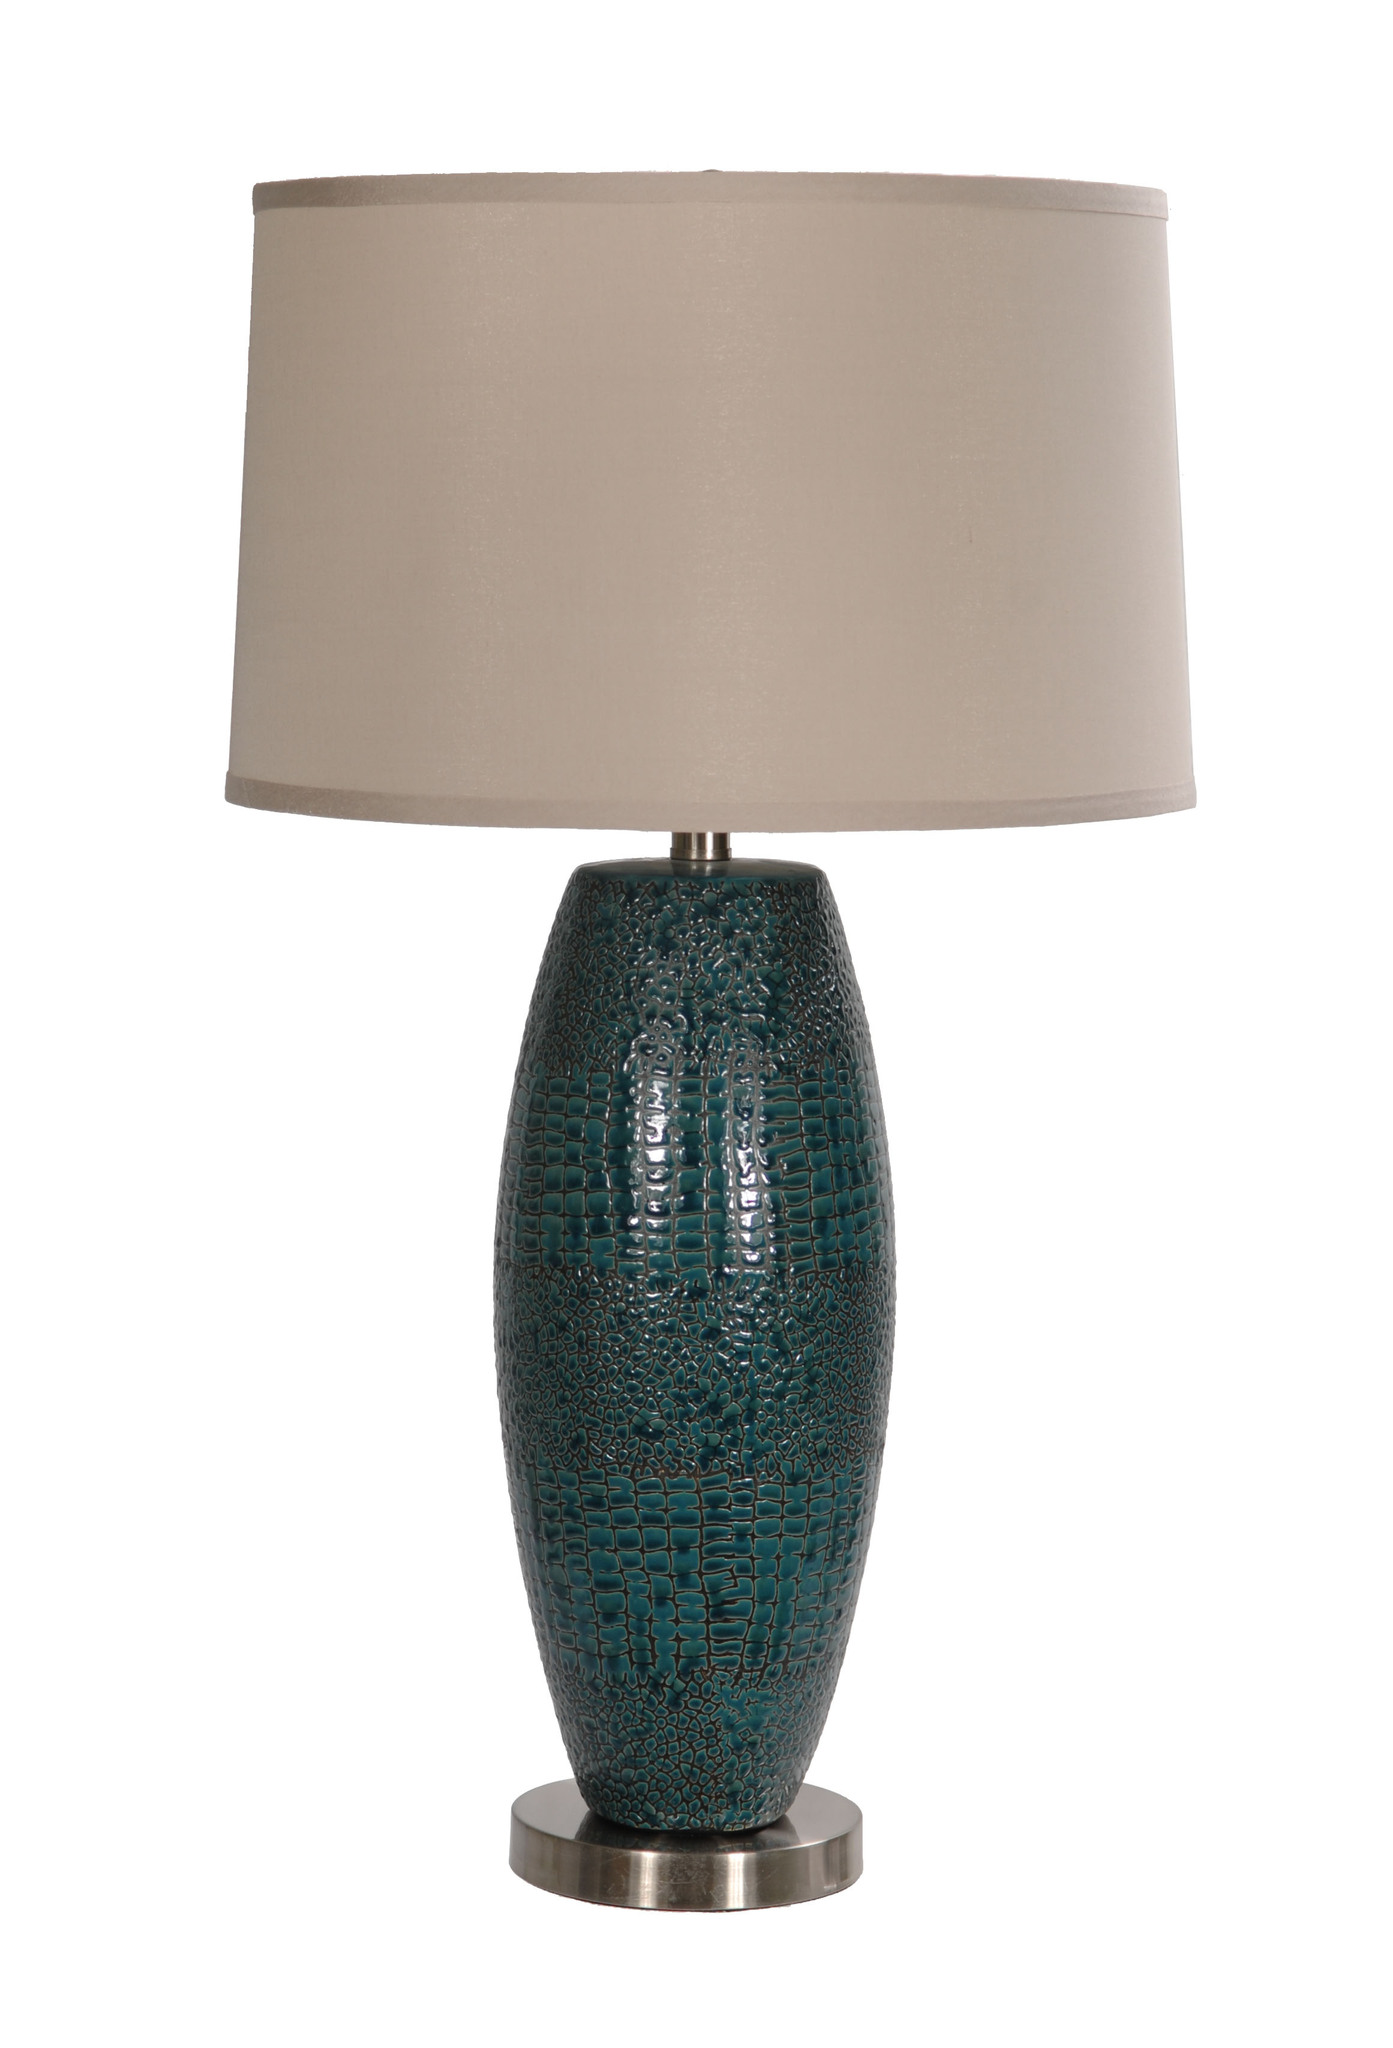 Melrose Blue Table Lamp